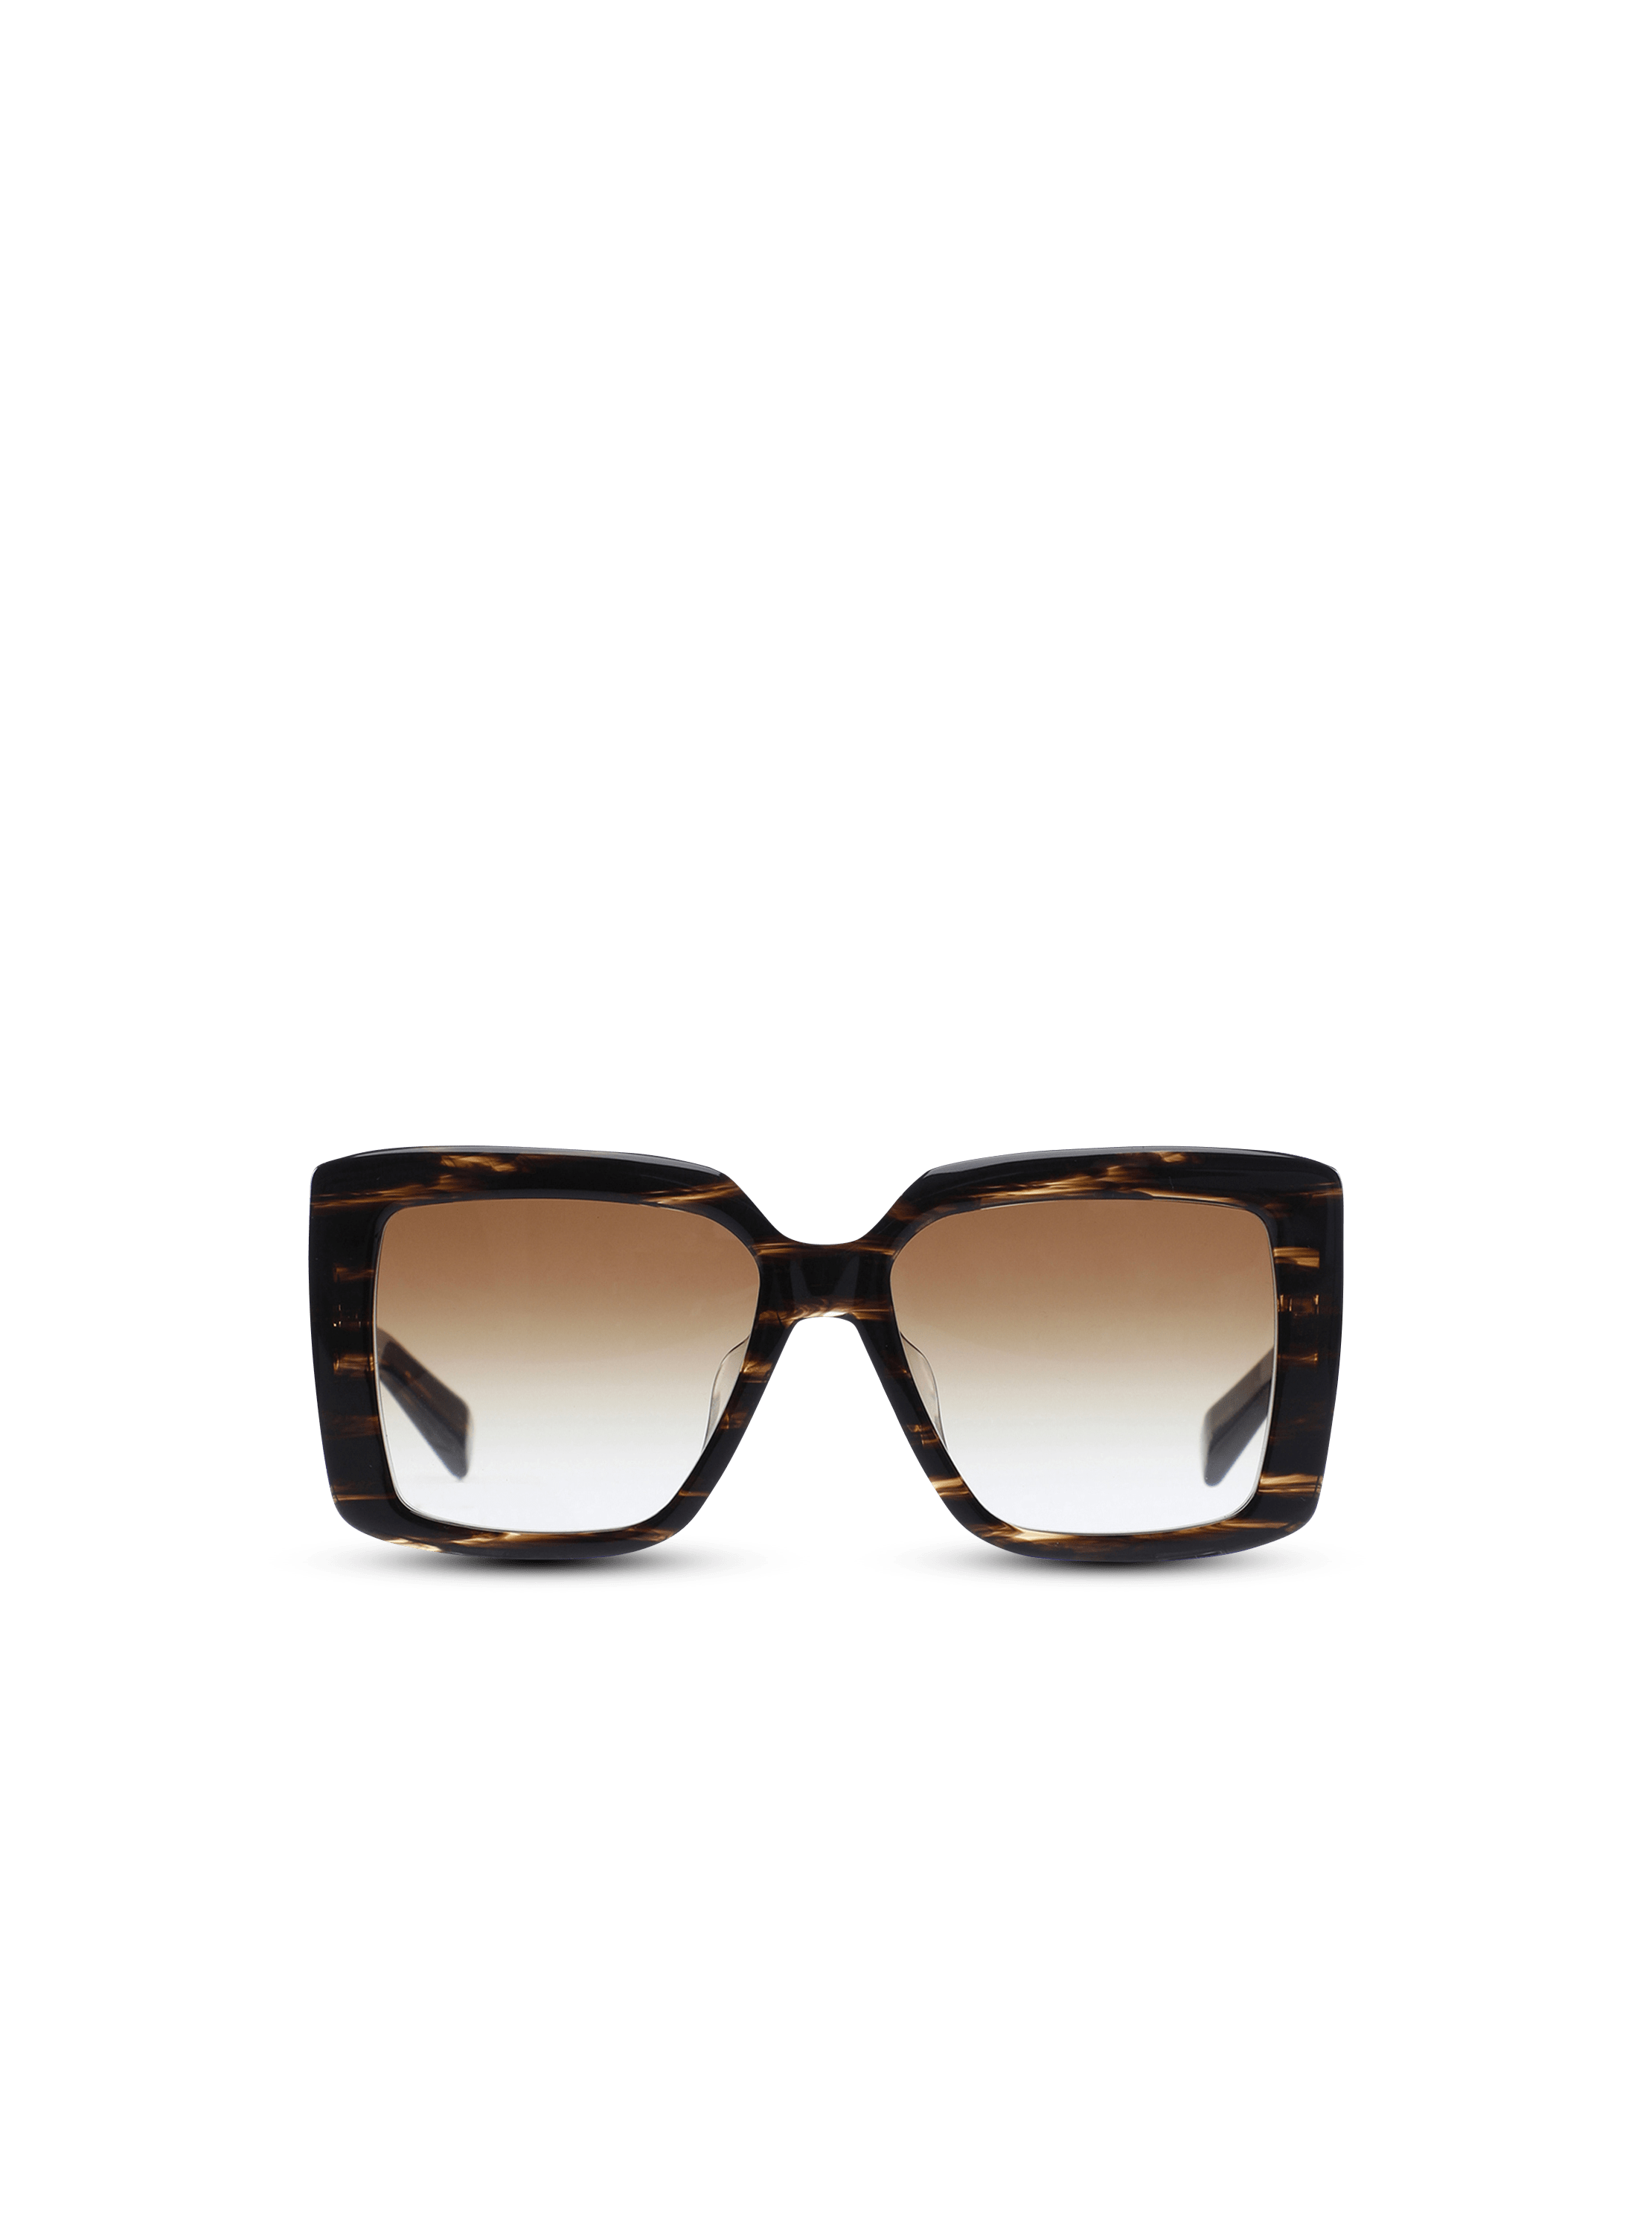 Tortoiseshell effect acetate La Royale sunglasses